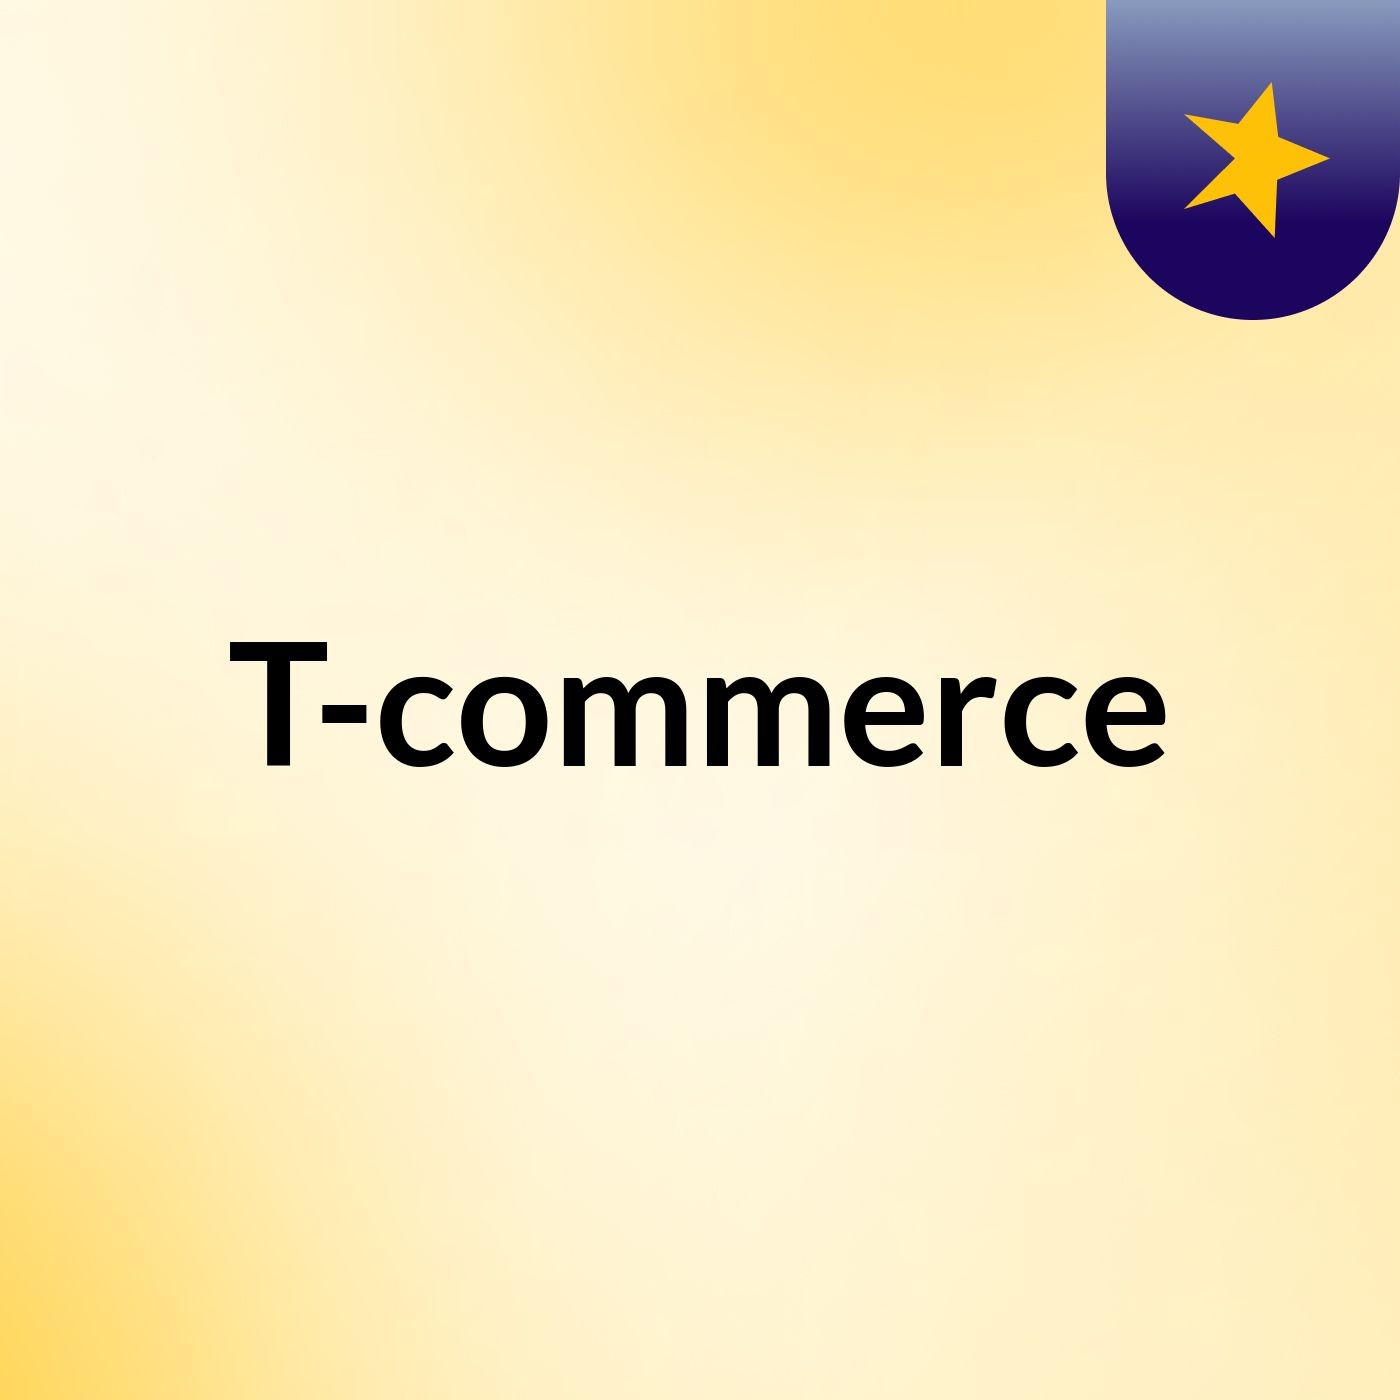 T-commerce